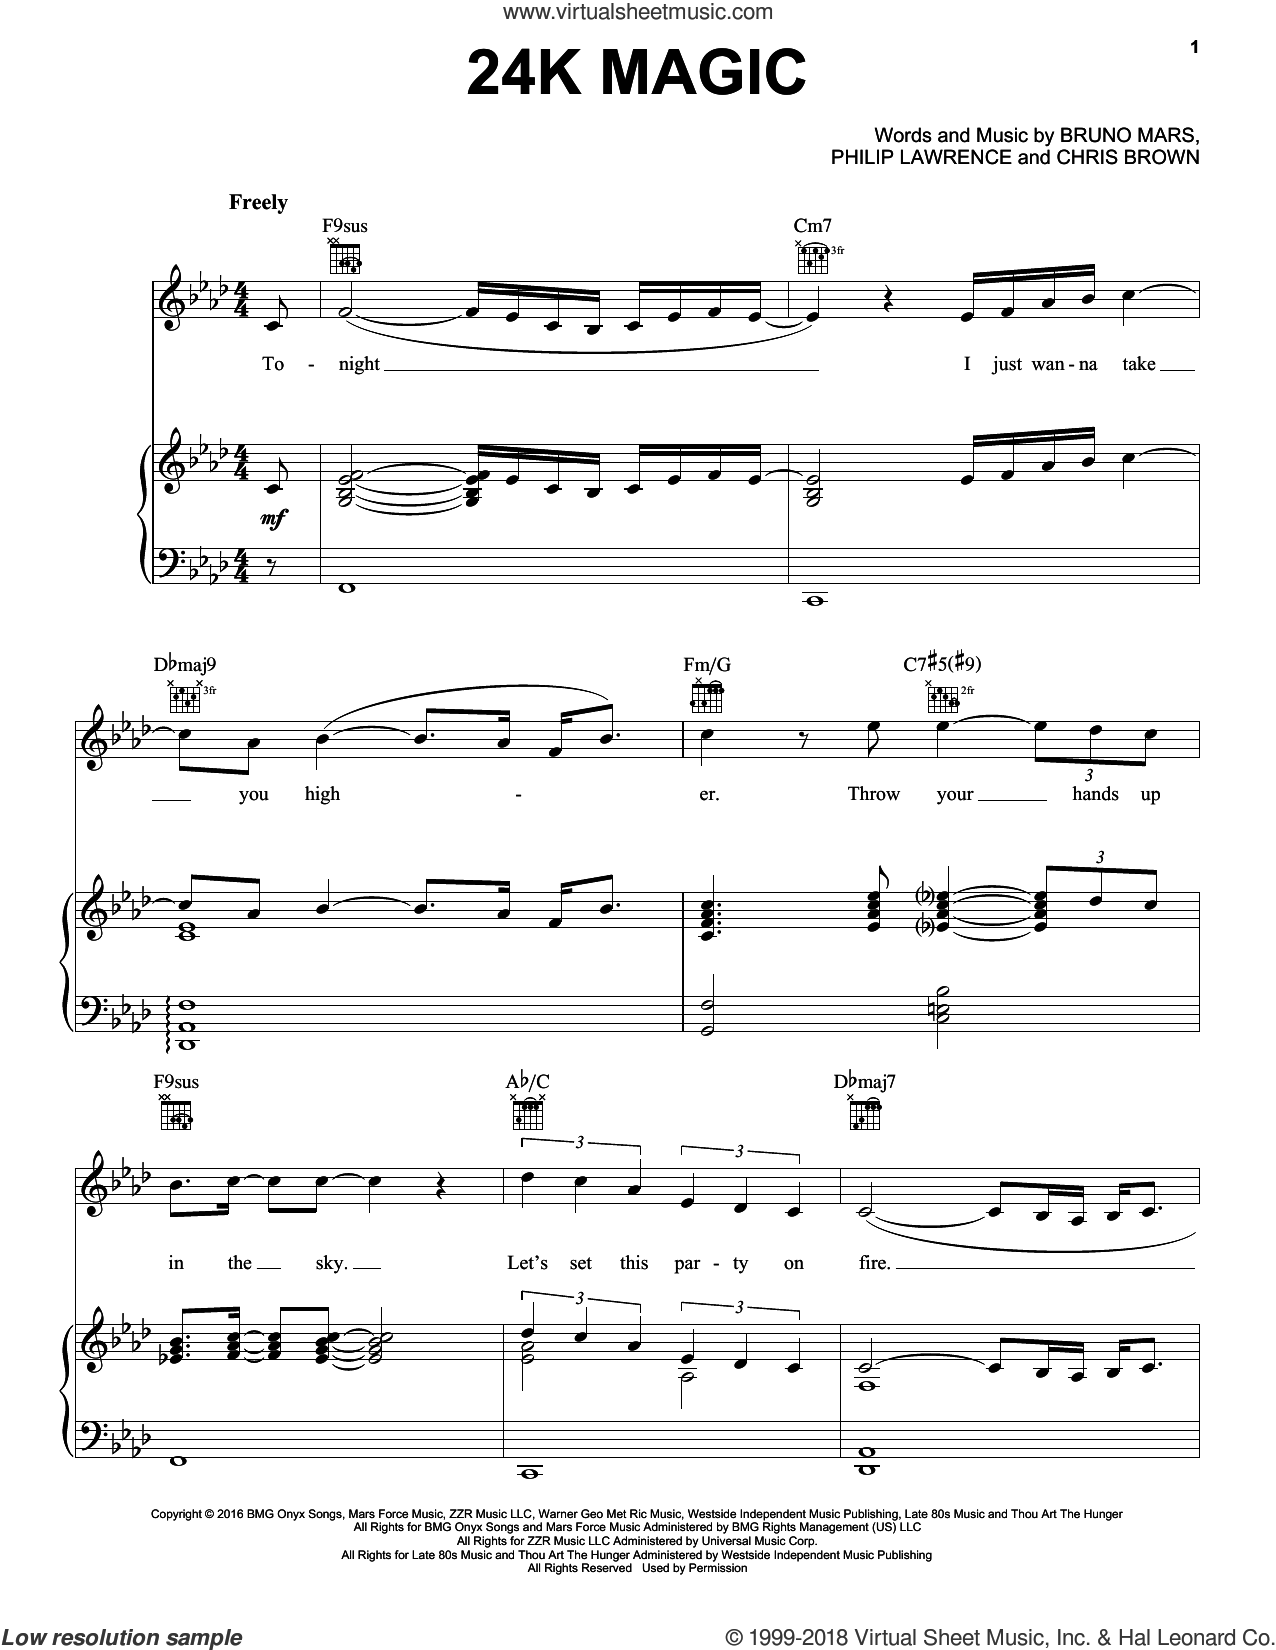 Mars - 24K Magic sheet music for voice, piano or guitar